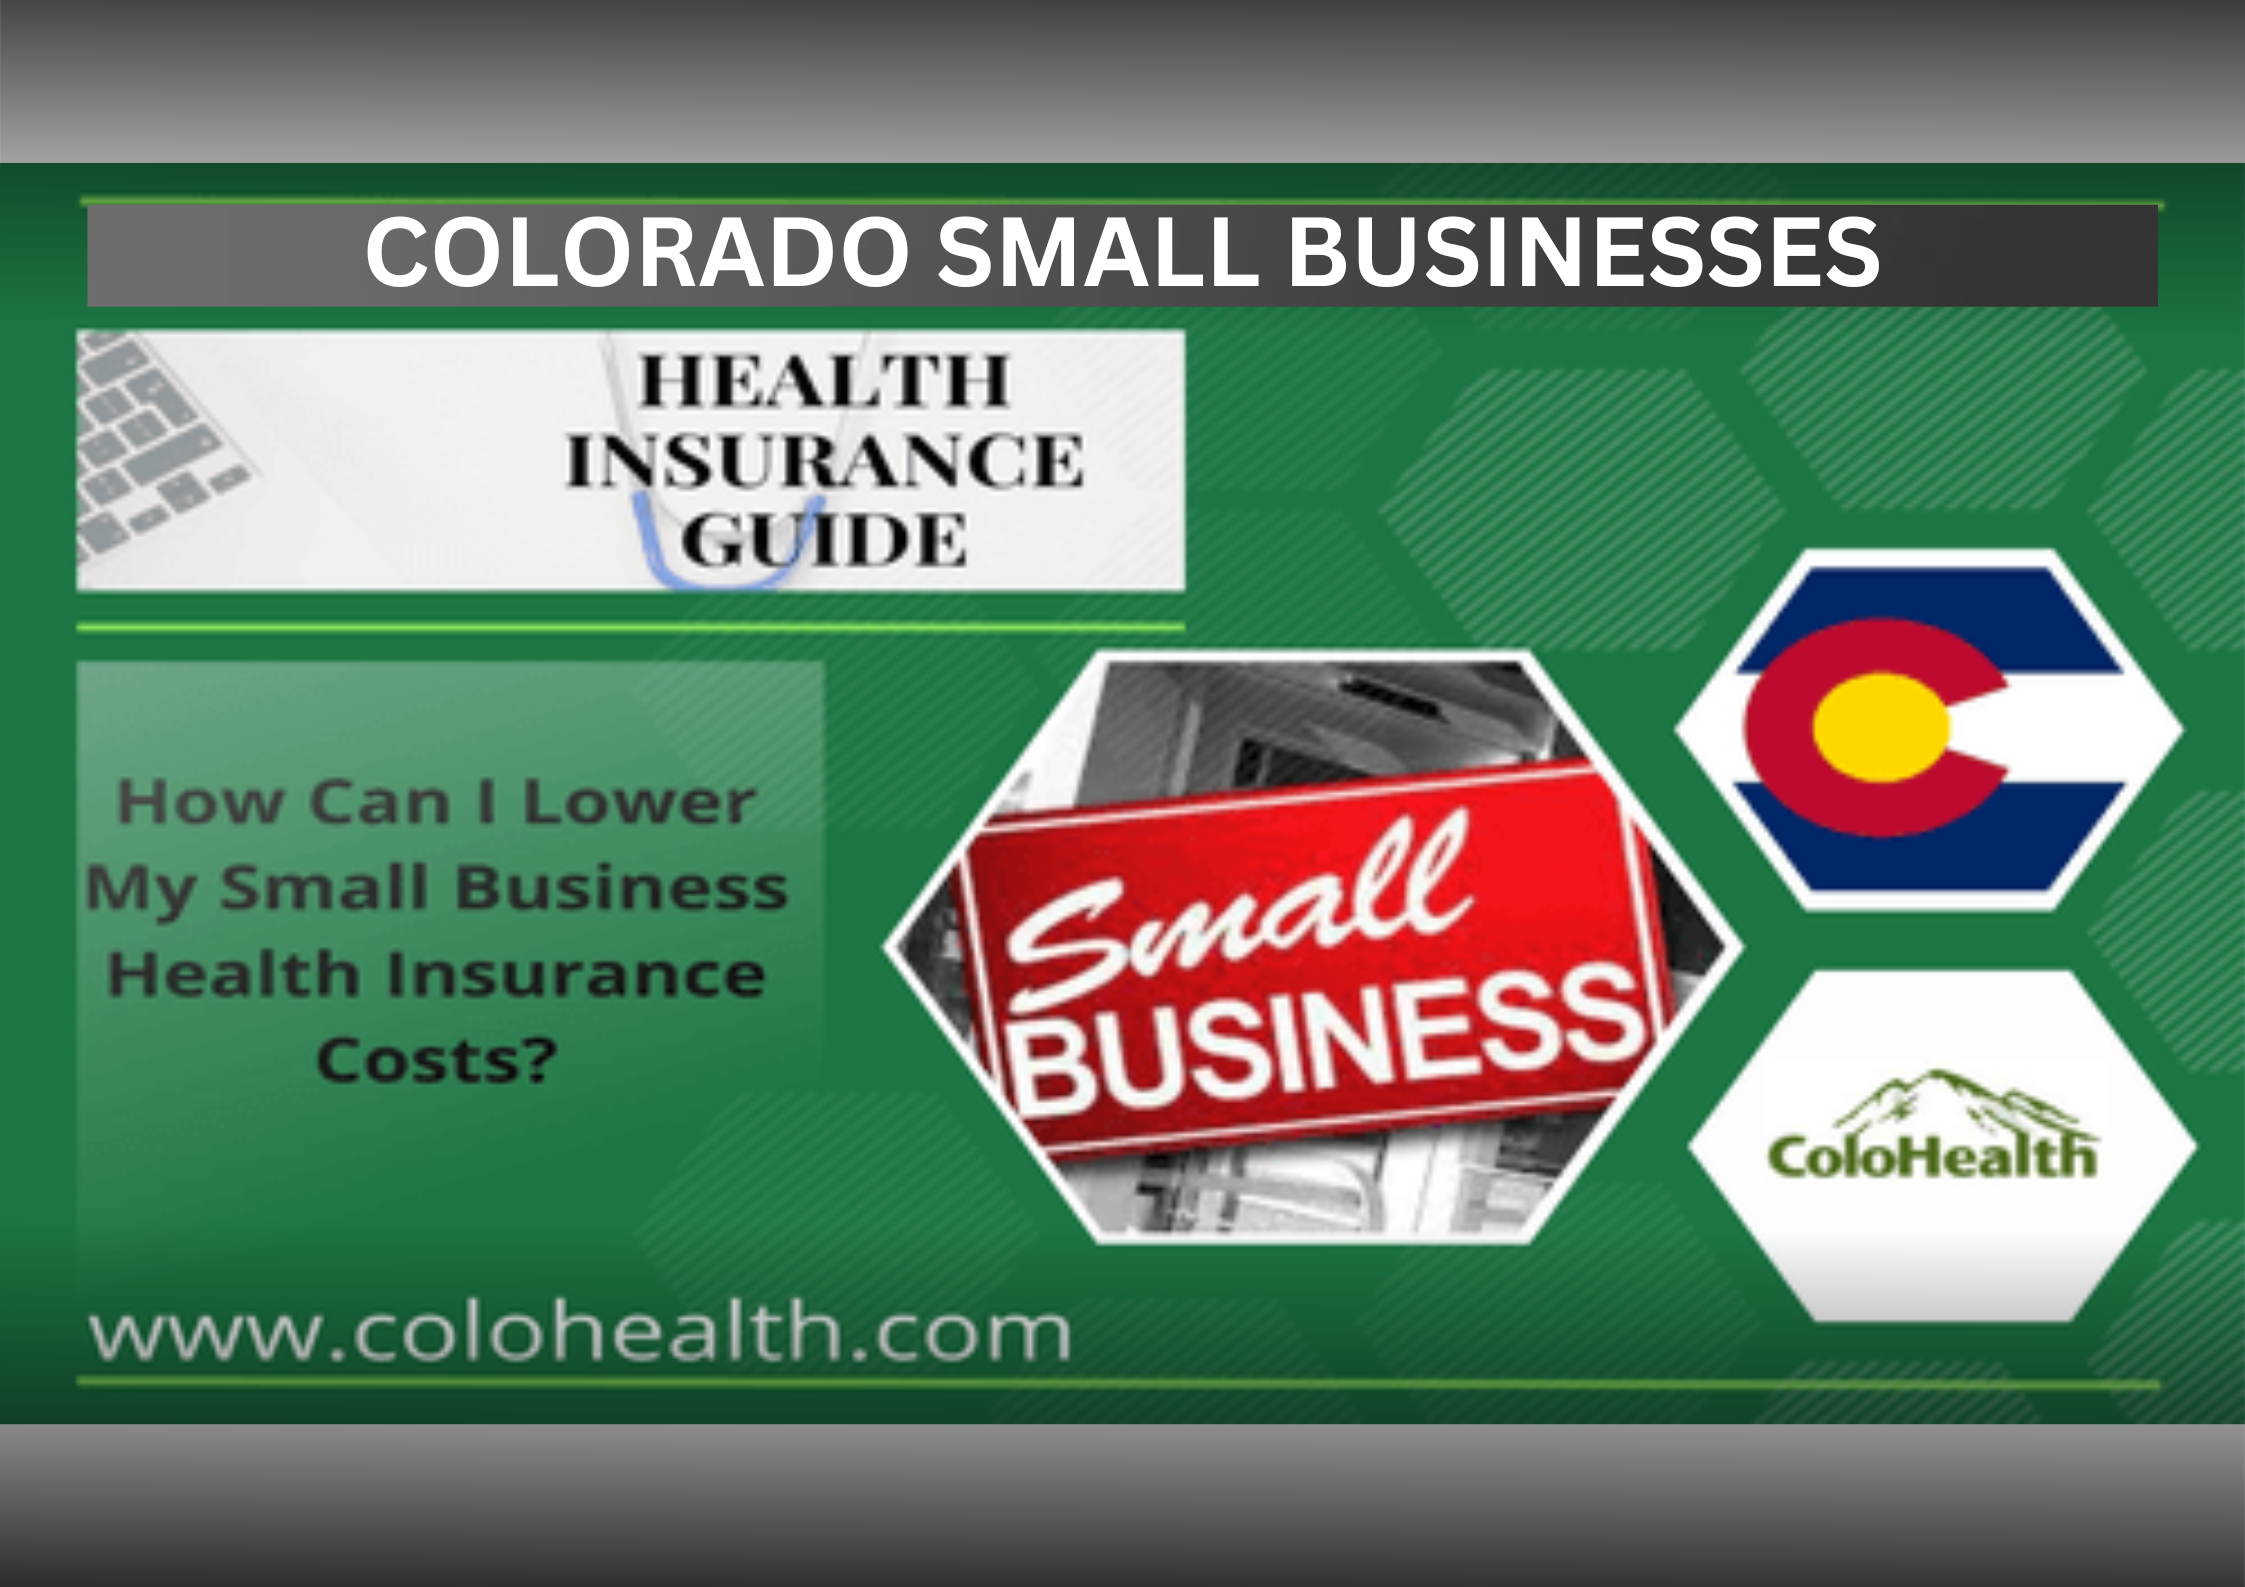 Colorado Small Business Health Insurance